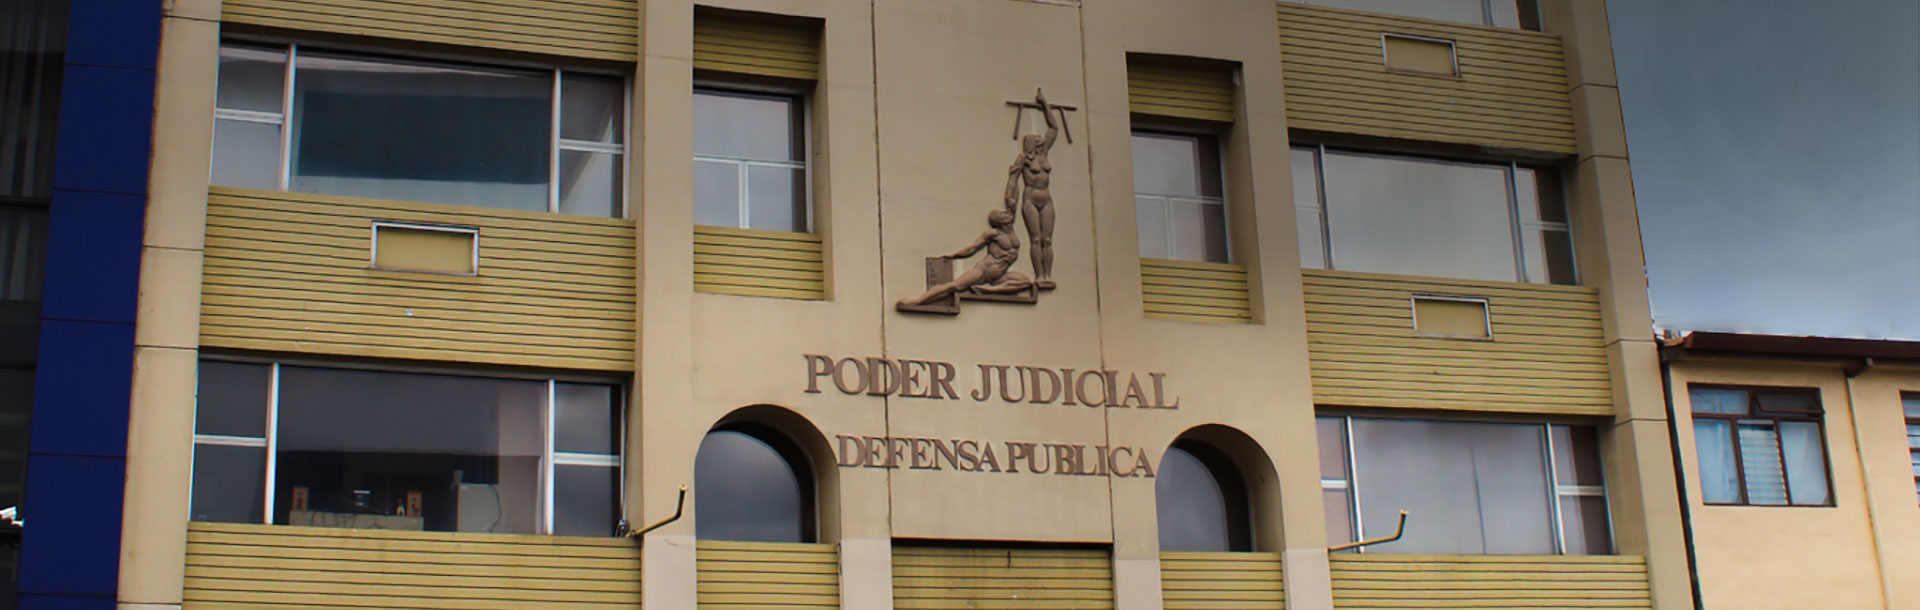 Edificio del Poder Judicial